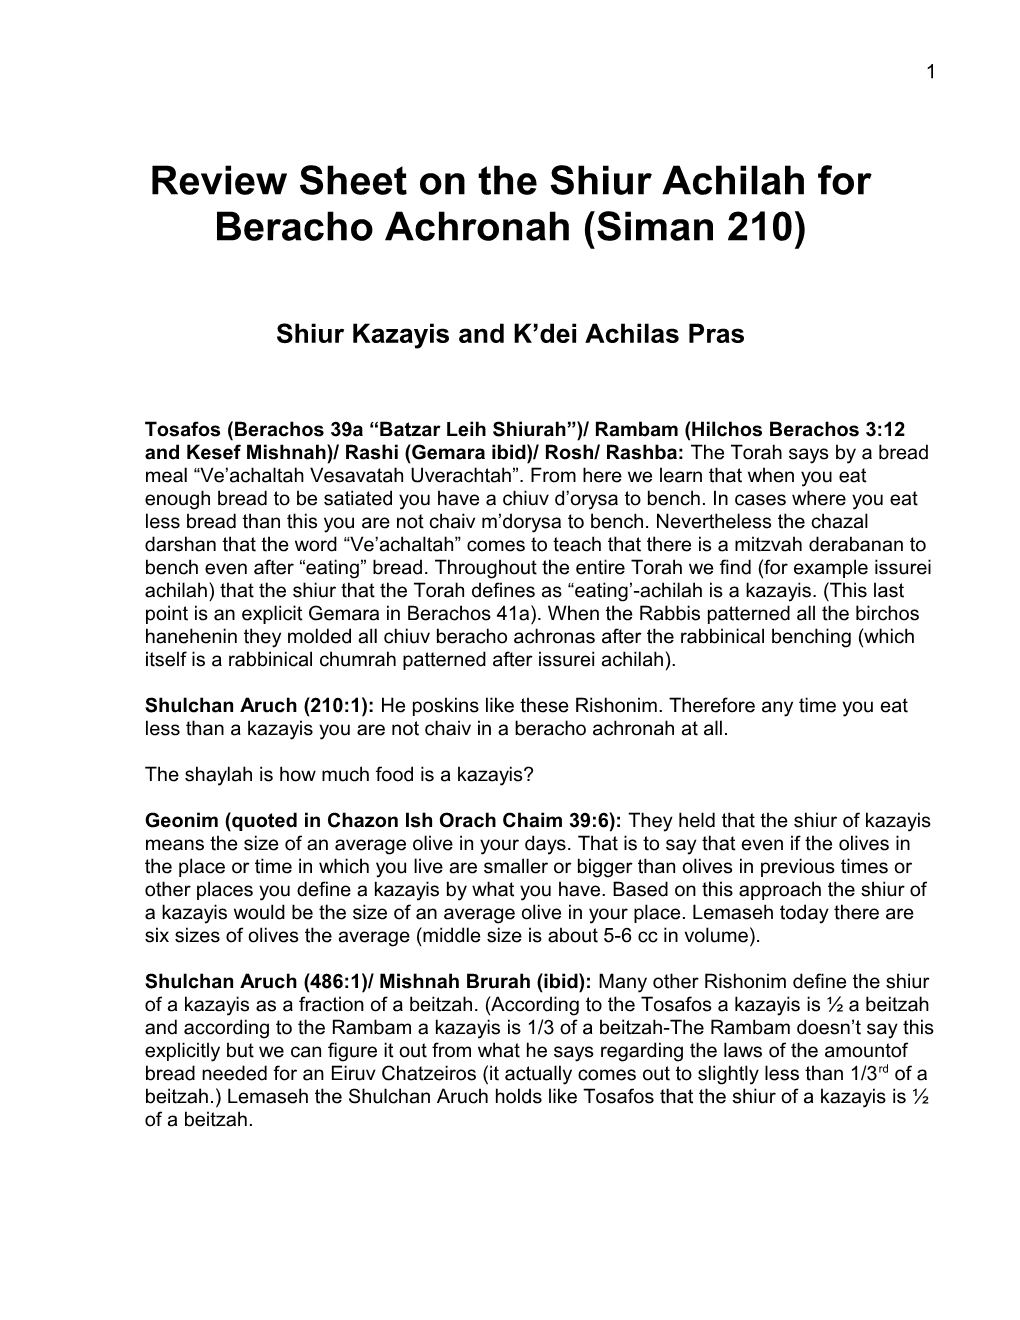 Review Sheet on the Shiur Achilah for Beracho Achronah (Siman 210)